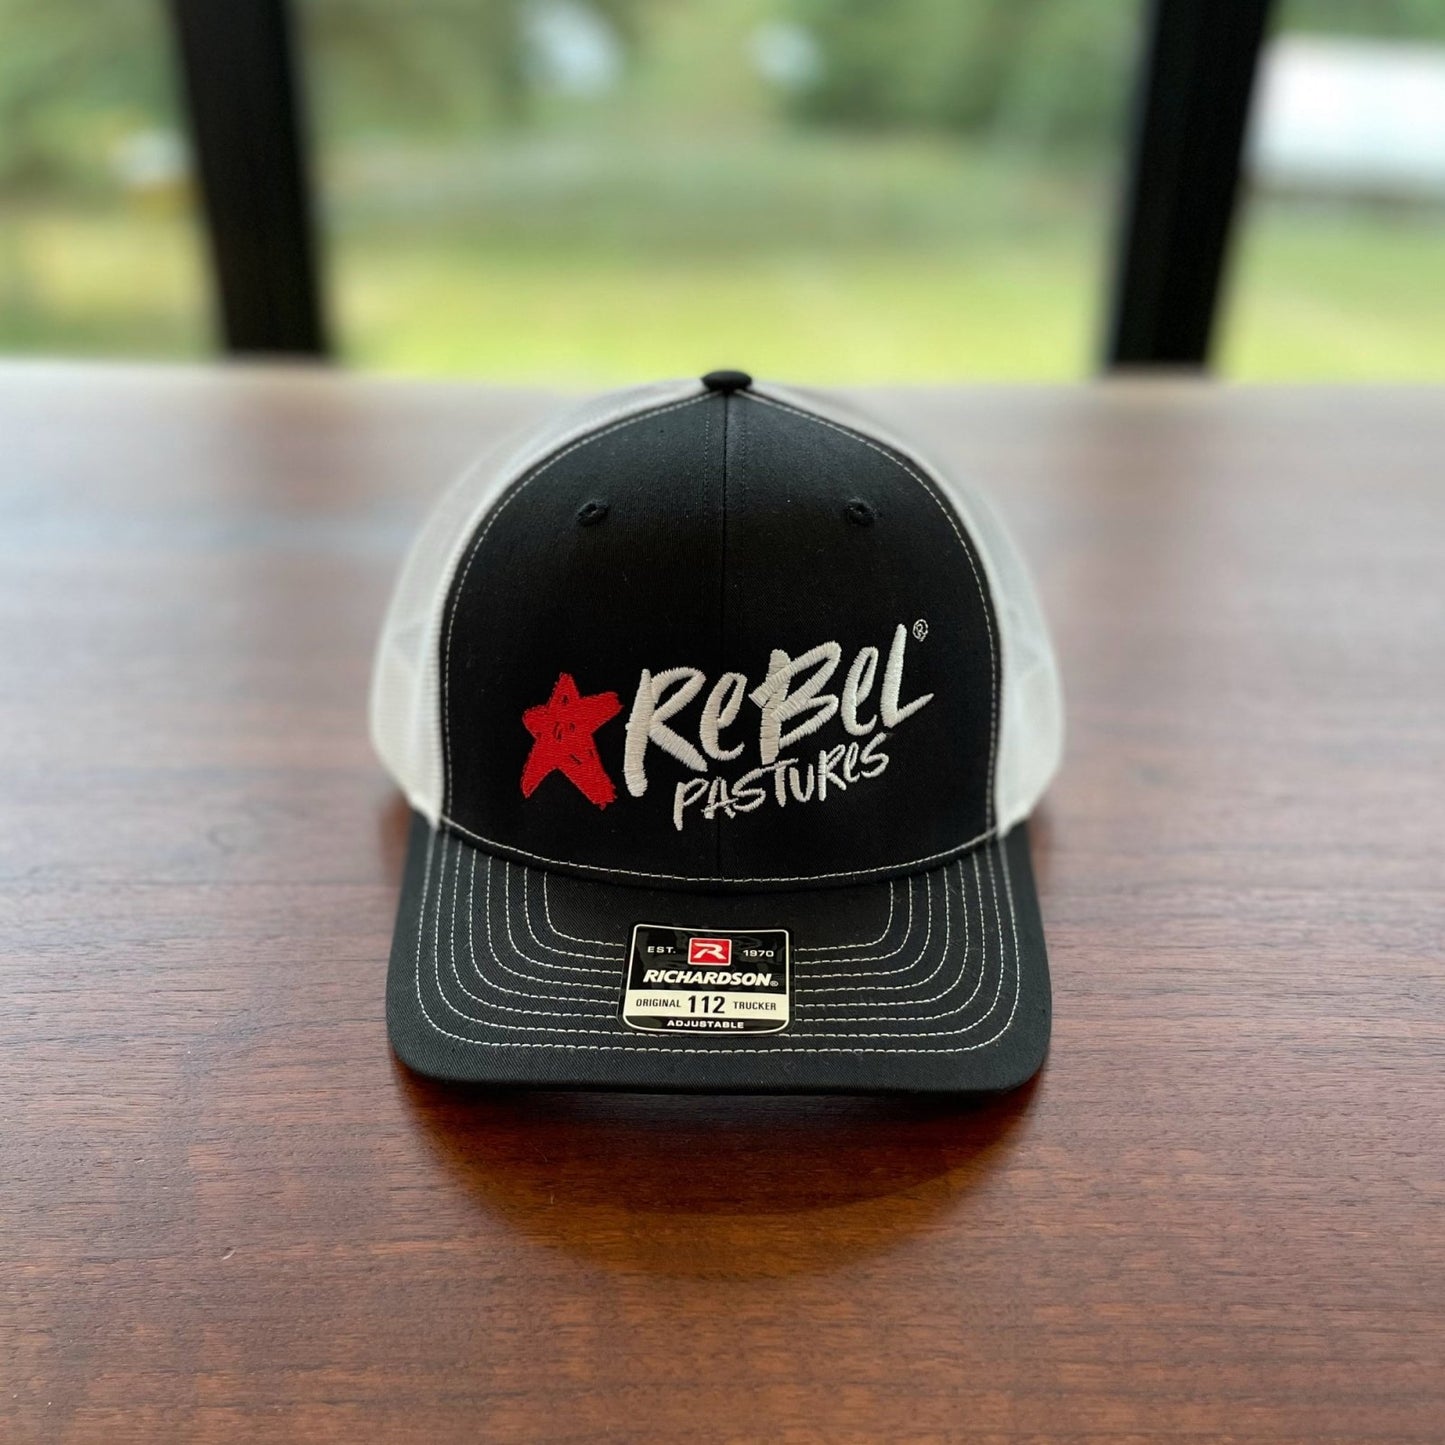 Rebel Black and White Trucker Hat - Rebel Pastures